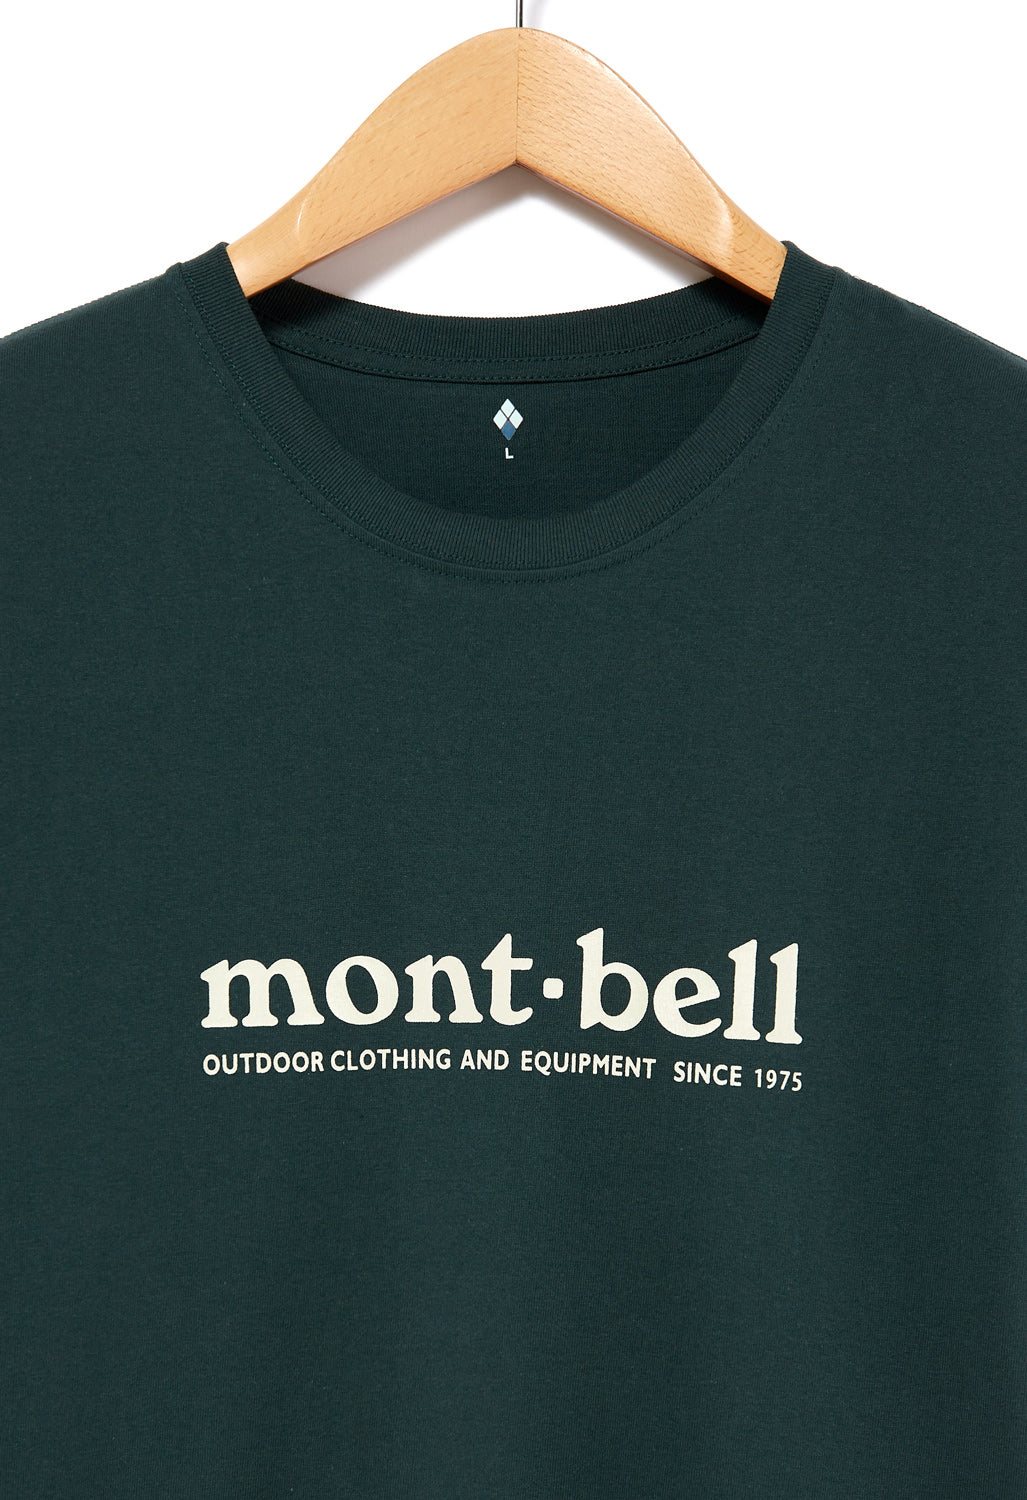 Montbell Pear Skin Cotton mont-bell T-Shirt - Hunter Green